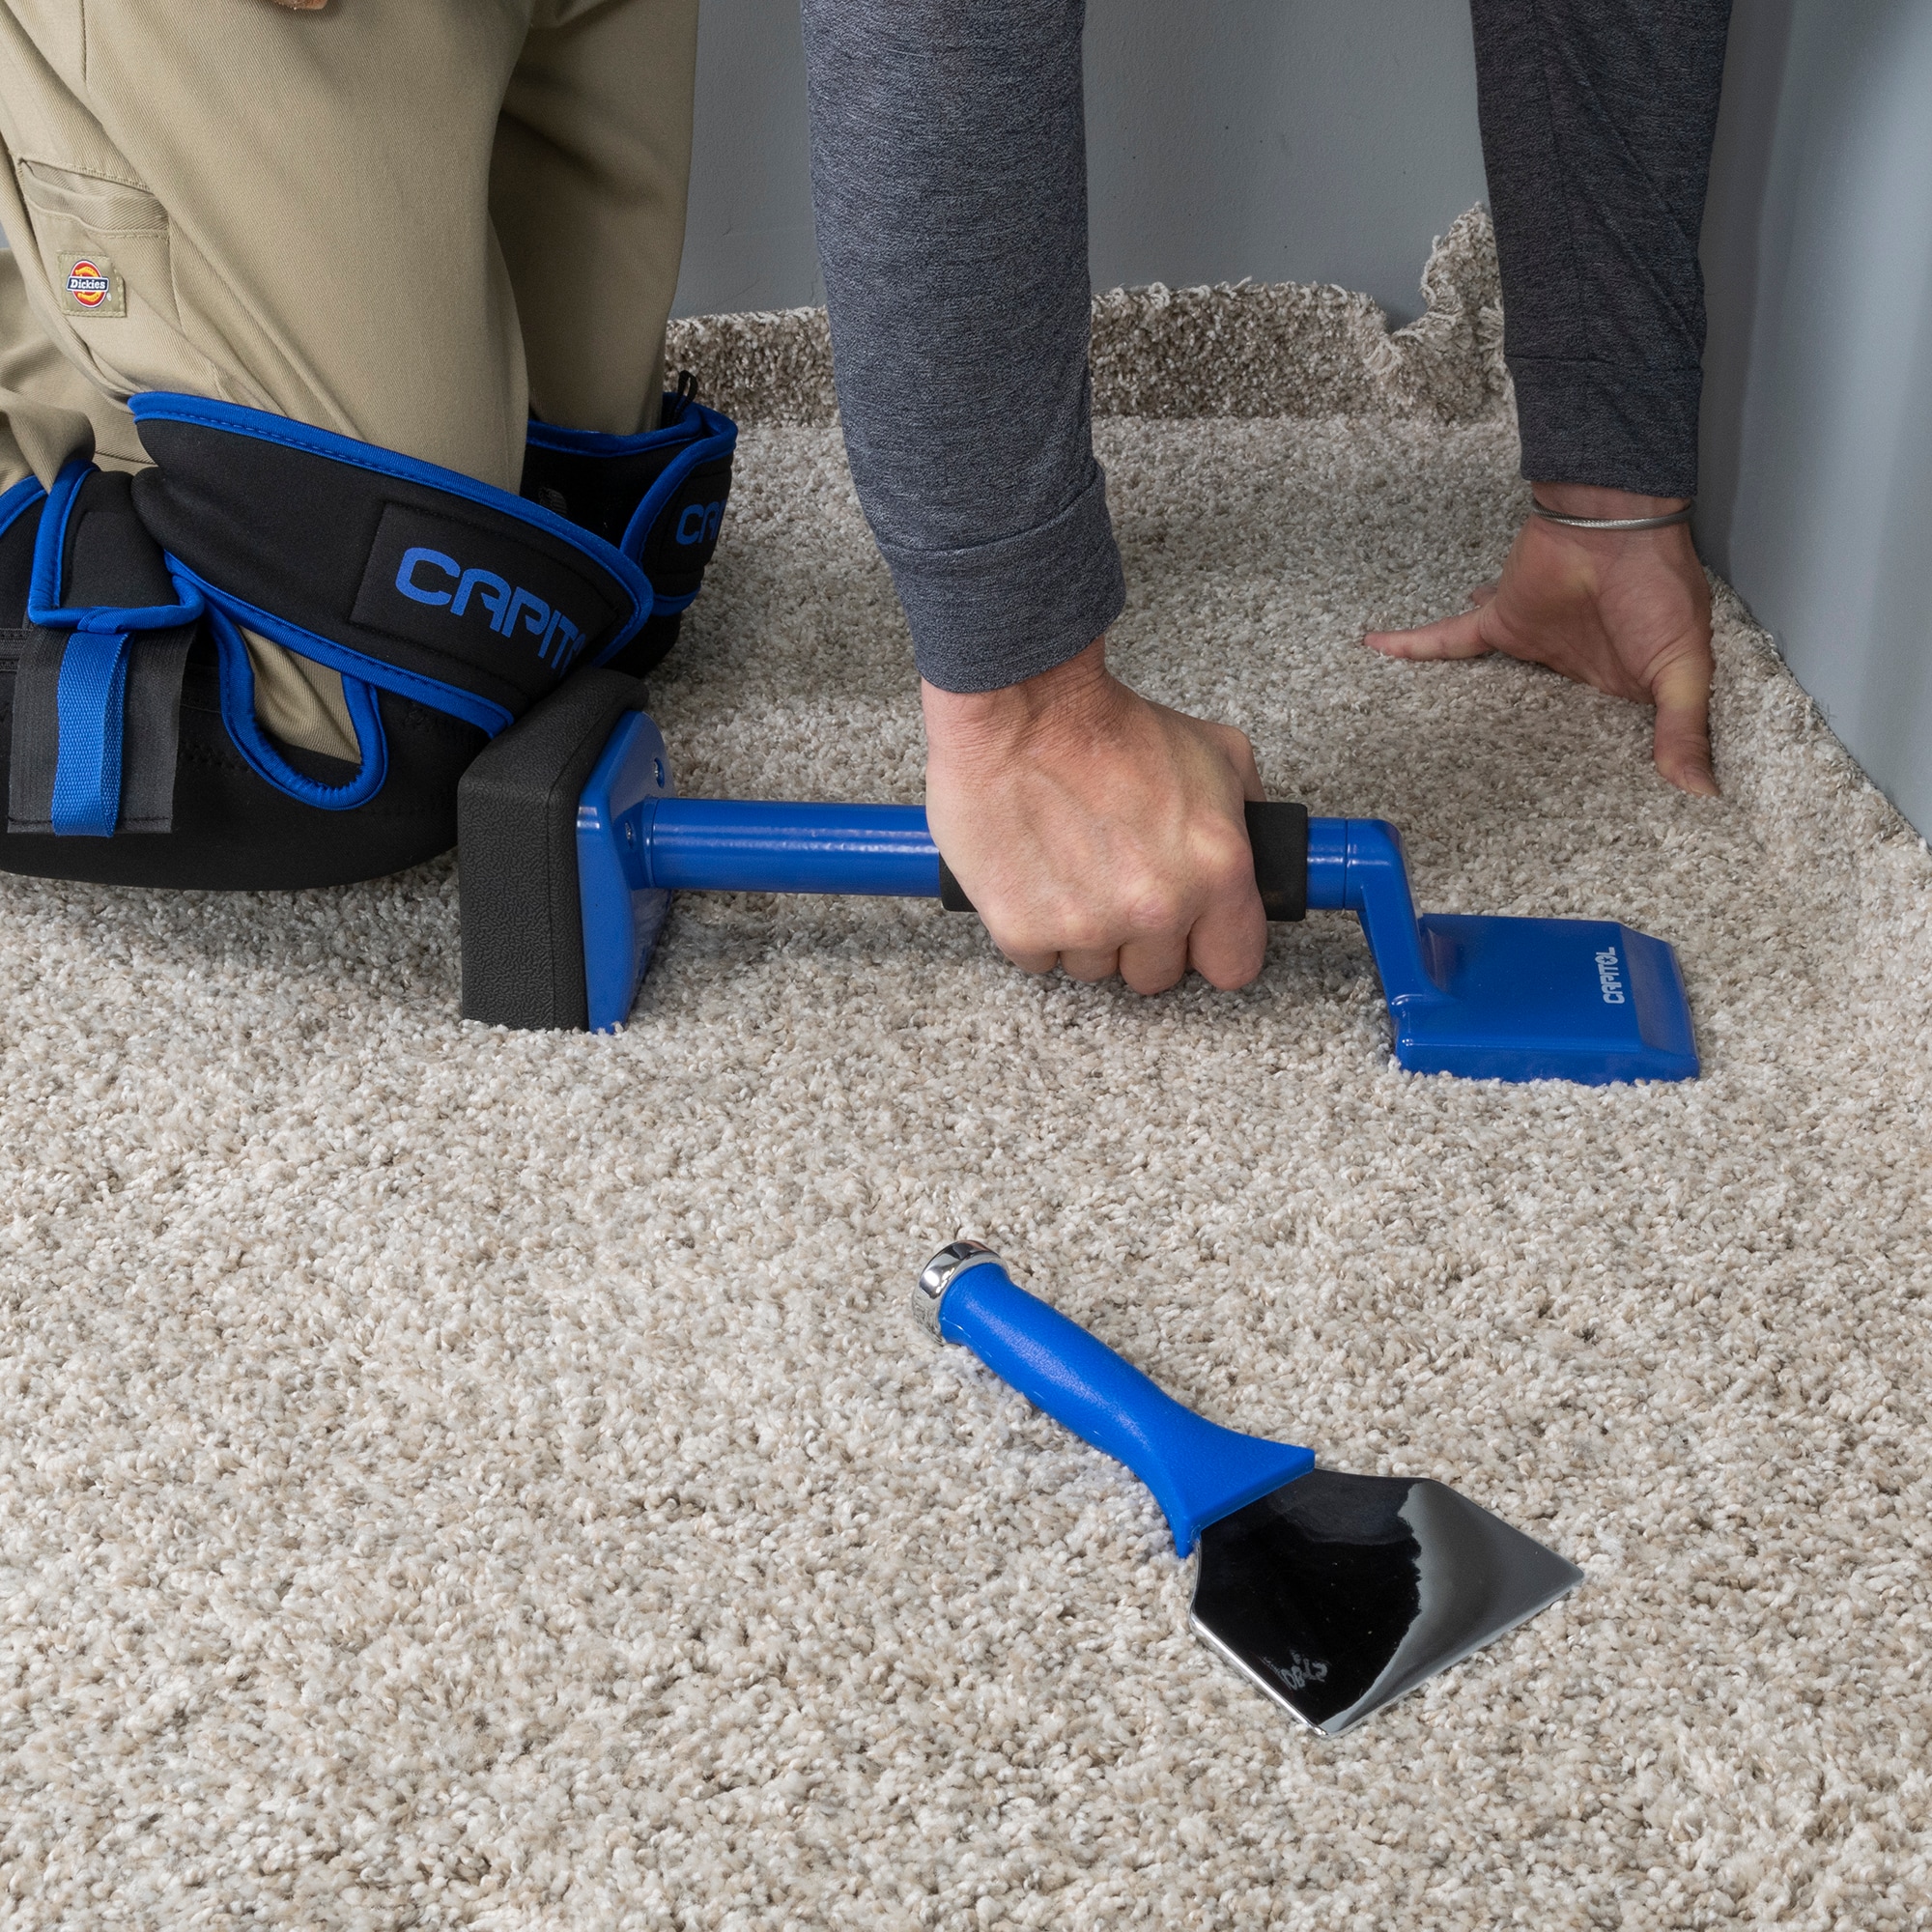 Carpet kicker. For kicking carpet (to move it along the floor